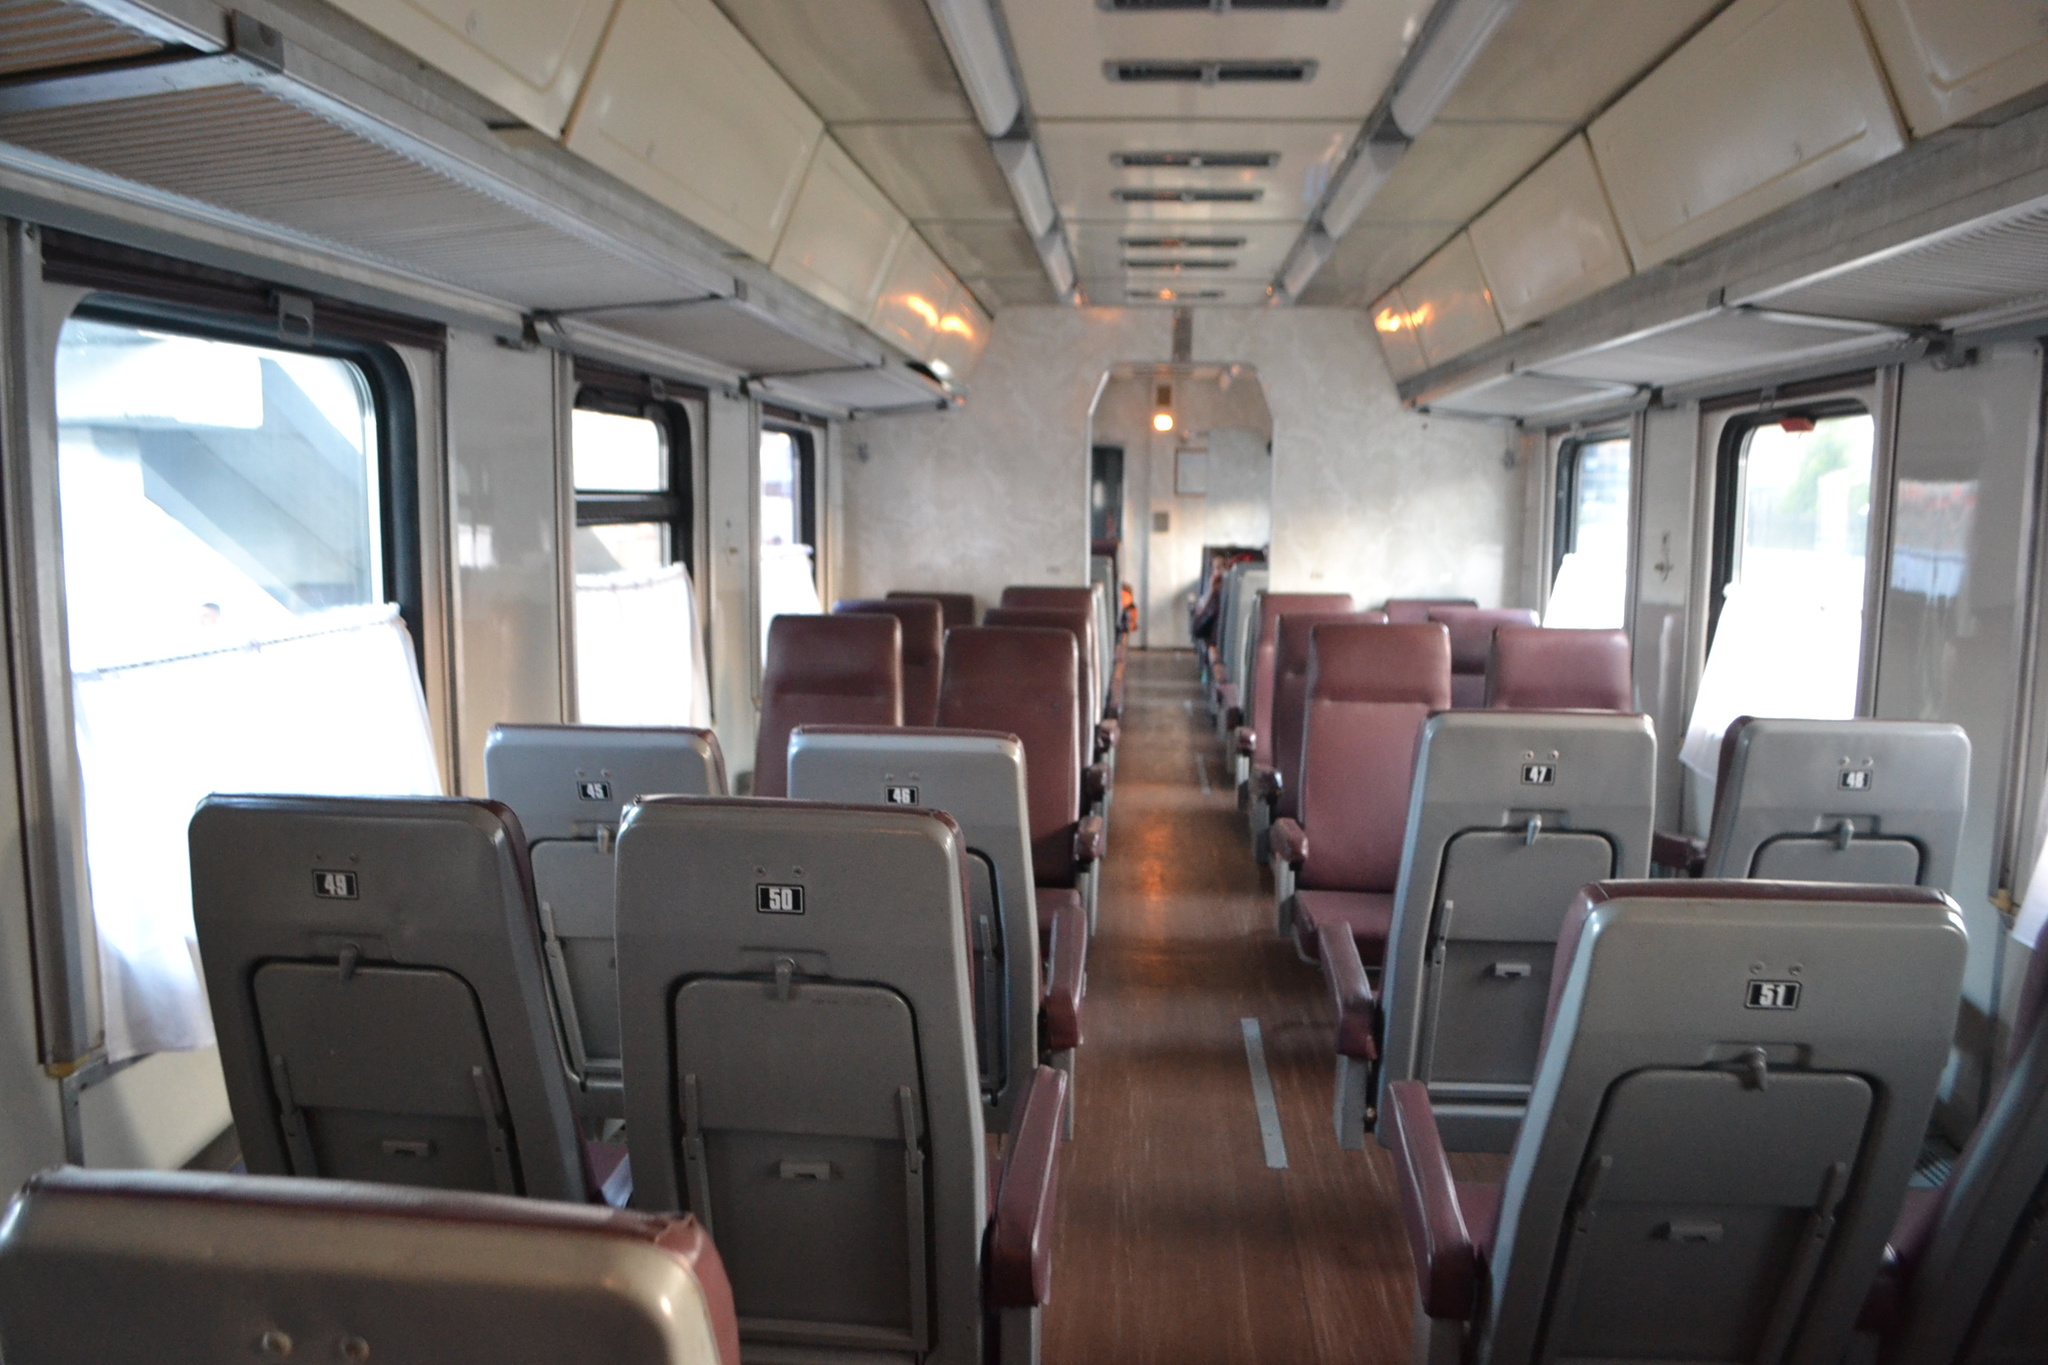 вагоны с сидячими местами самара санкт петербург